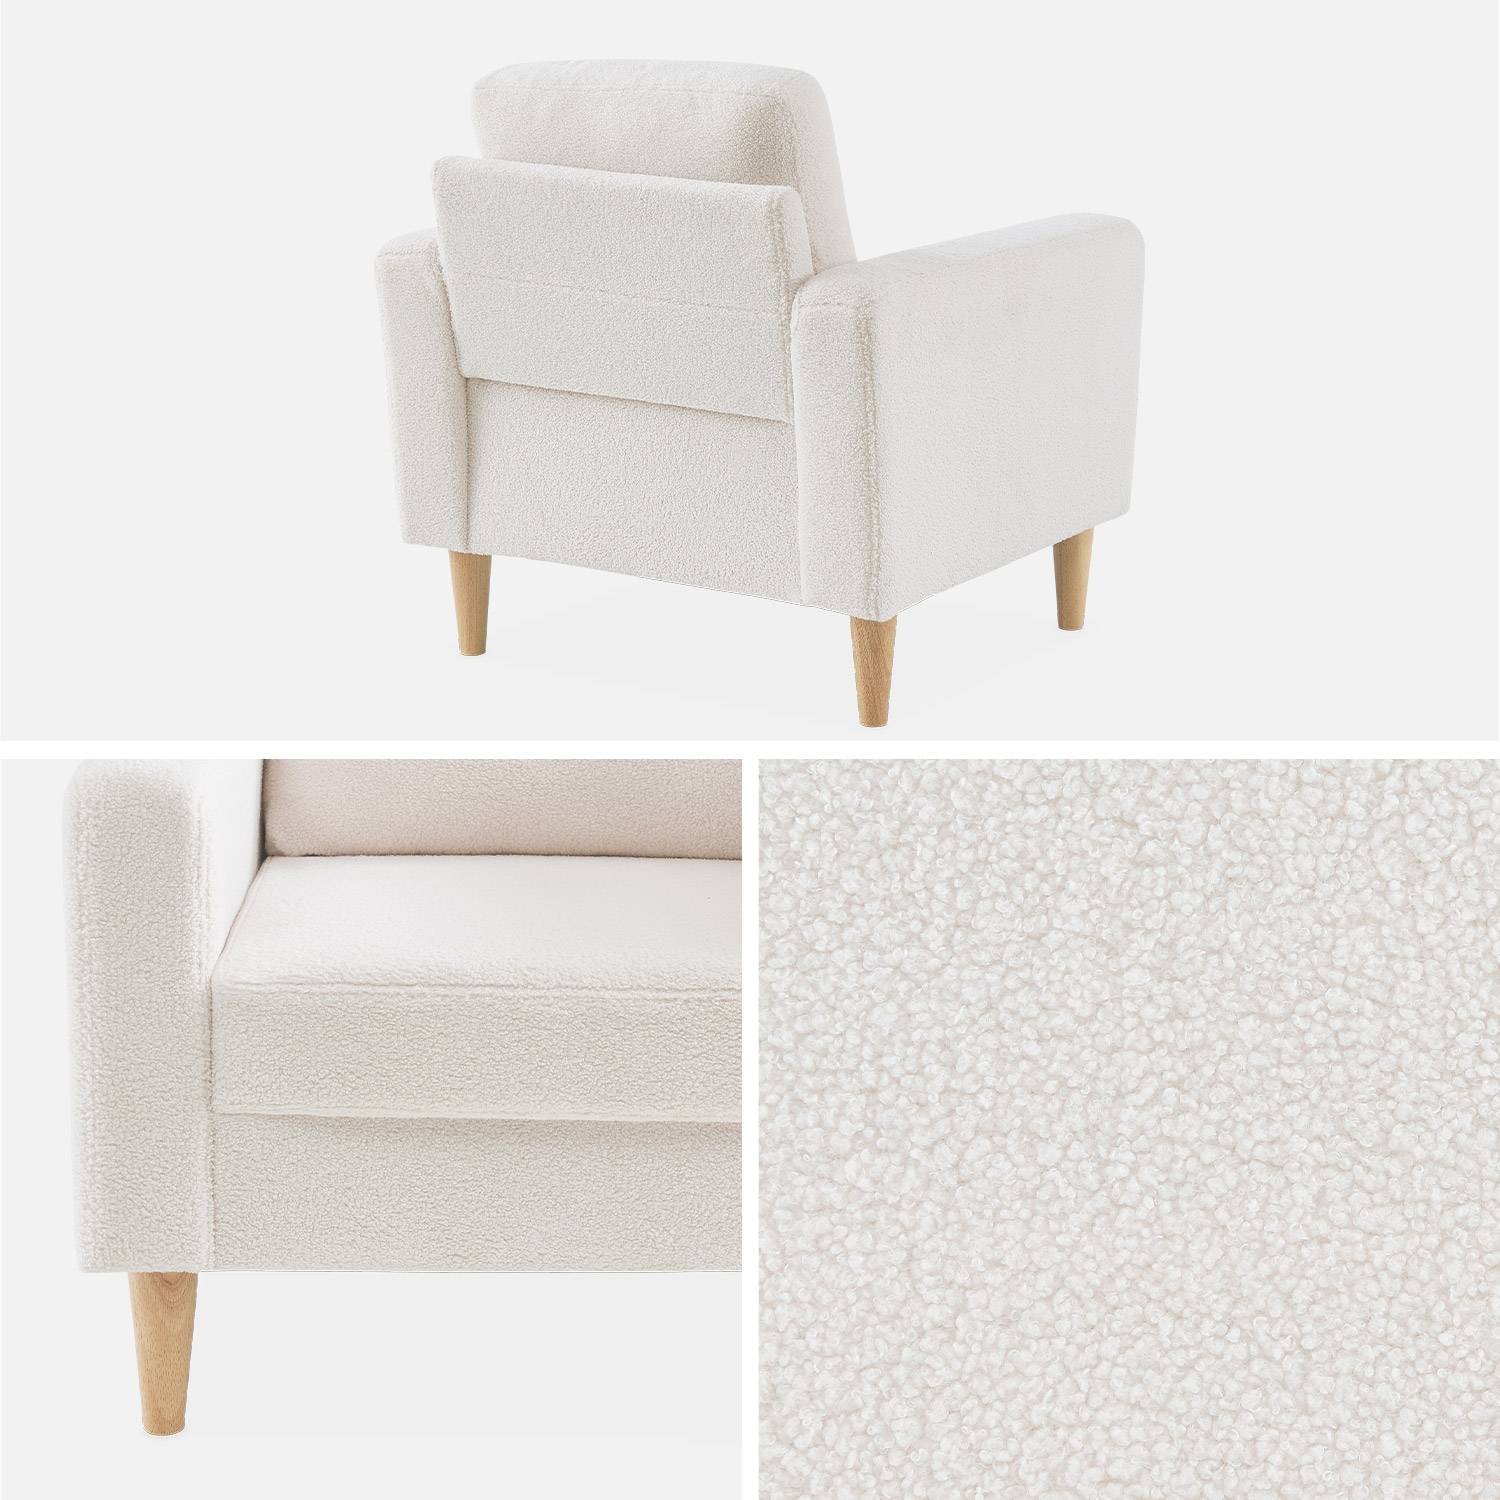 Bouclé Sessel Weiß, skandinavisches Design - Bjorn - 1 Sitzer, Fauteuil gerade mit Holzbeinen Photo4